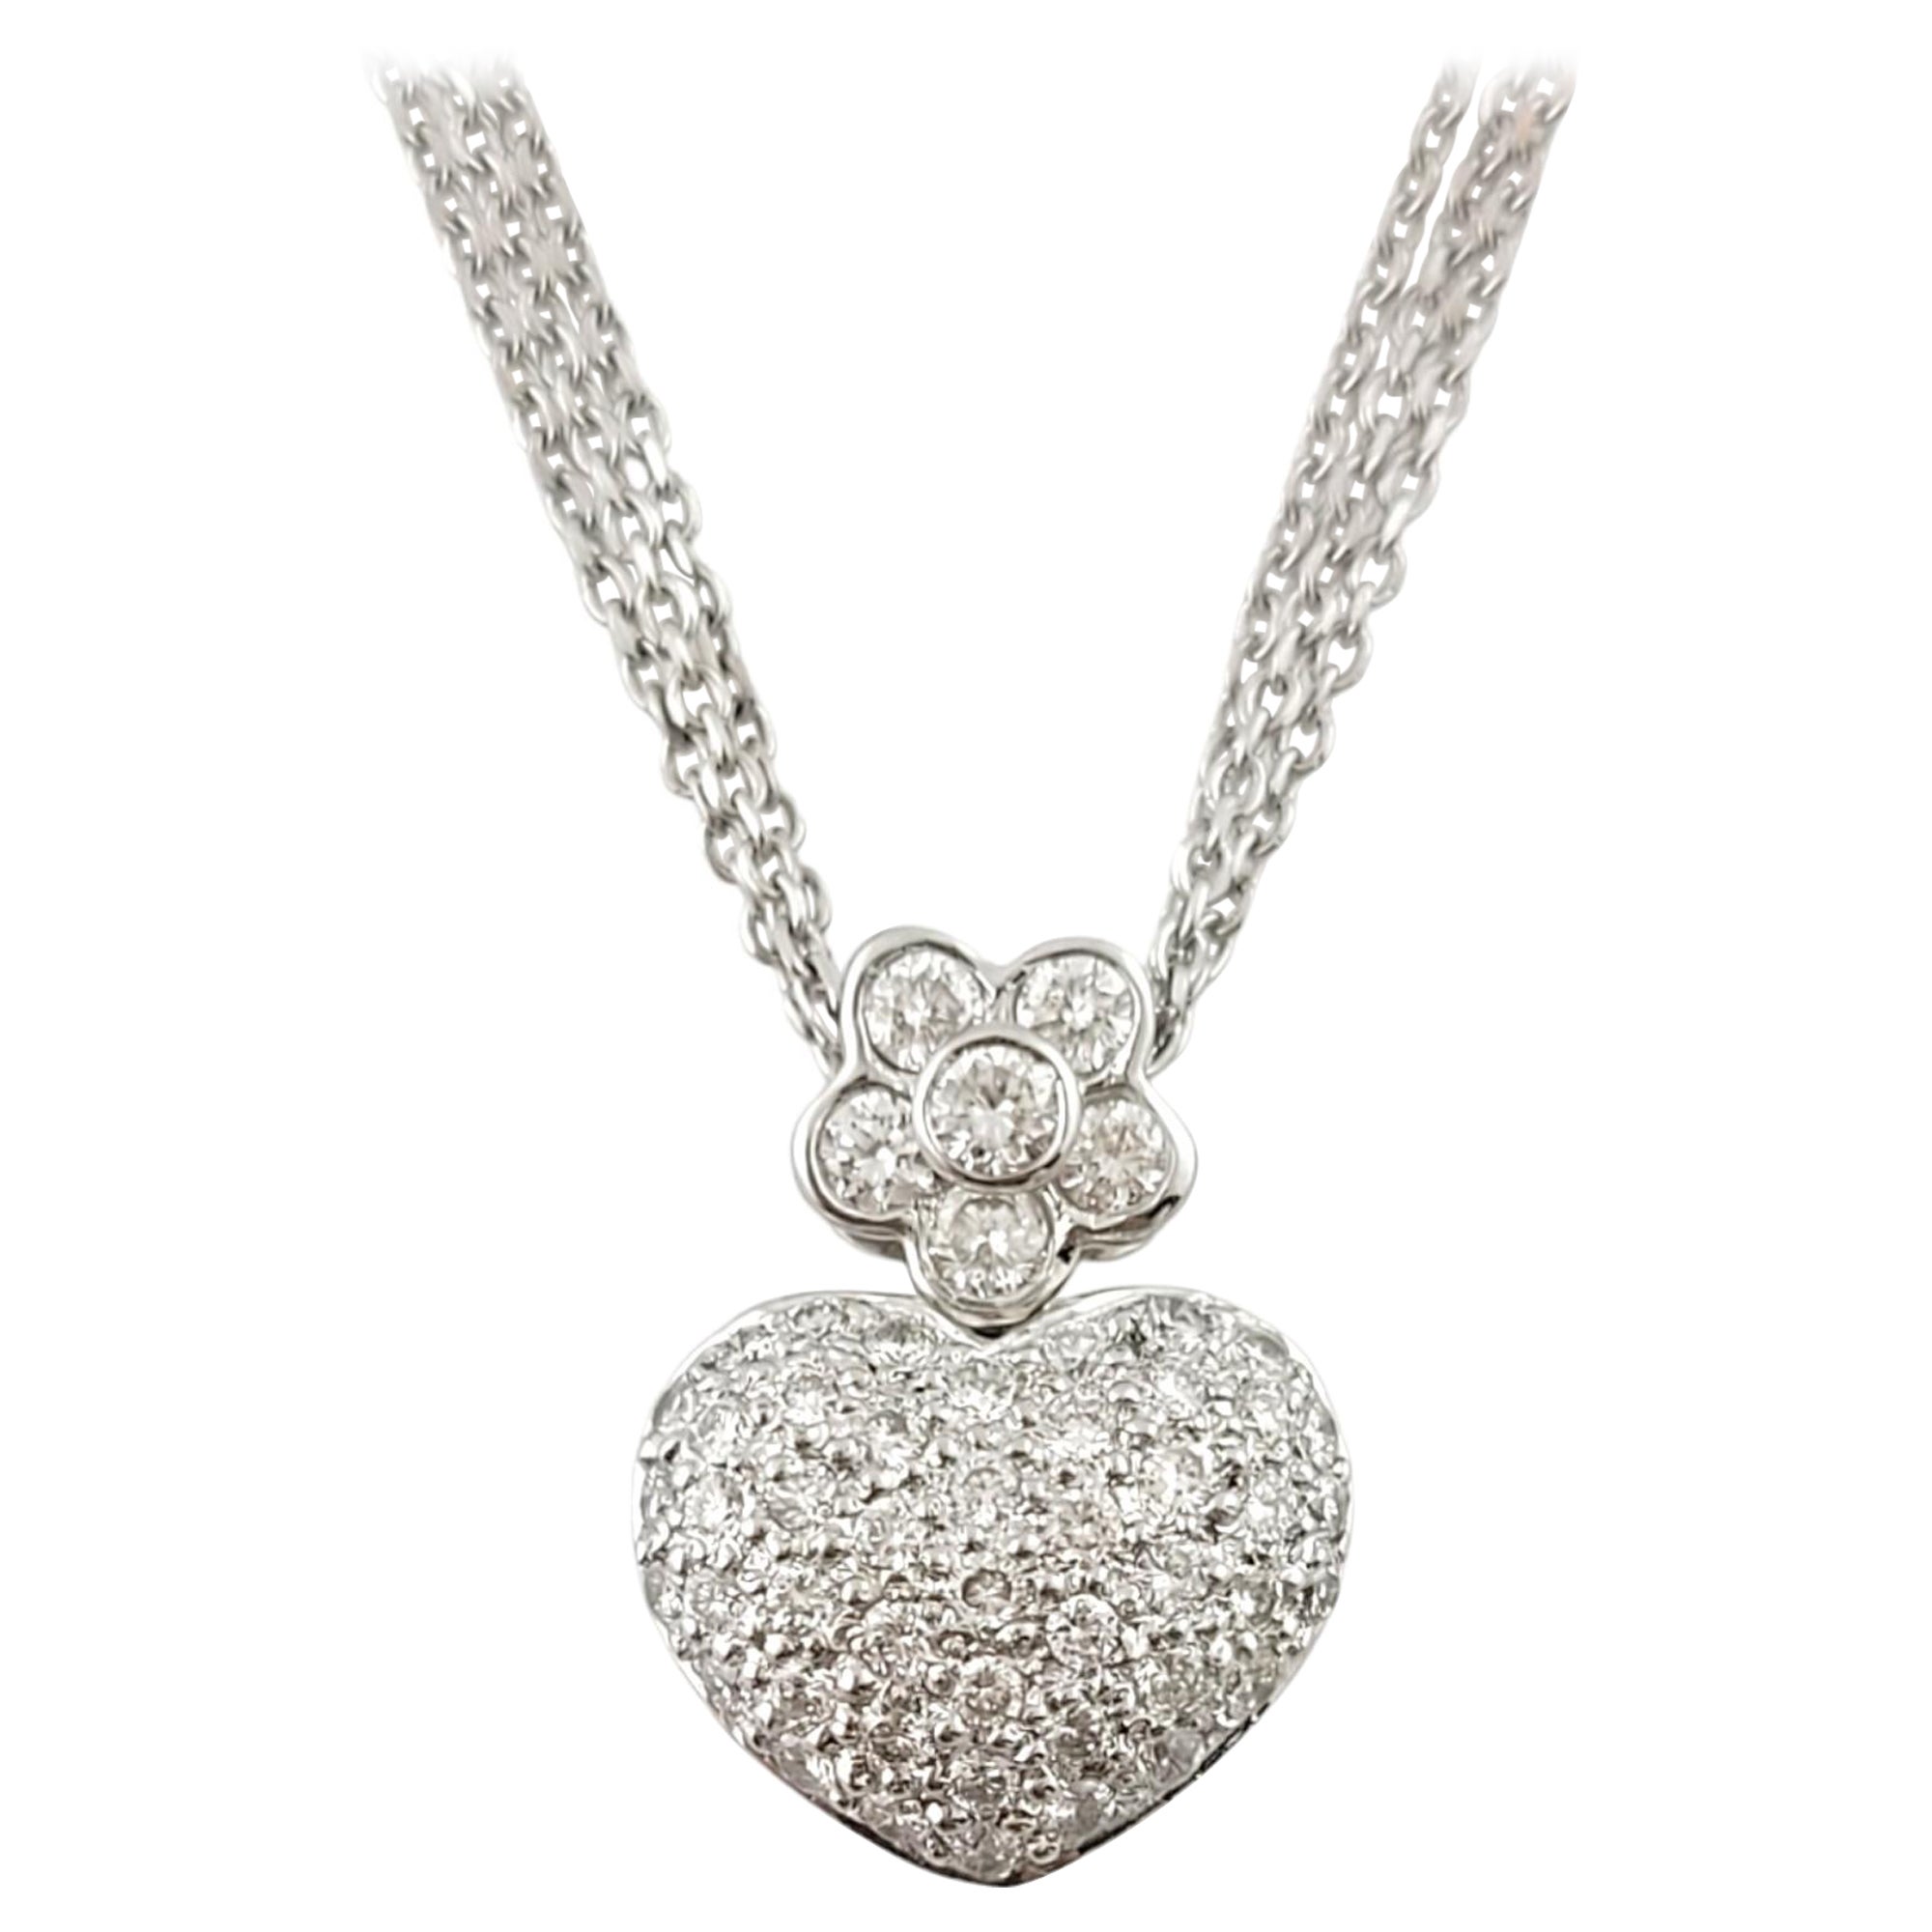 18K White Gold Diamond Heart Pendant w/ 14K White Gold Chain #15930 For Sale